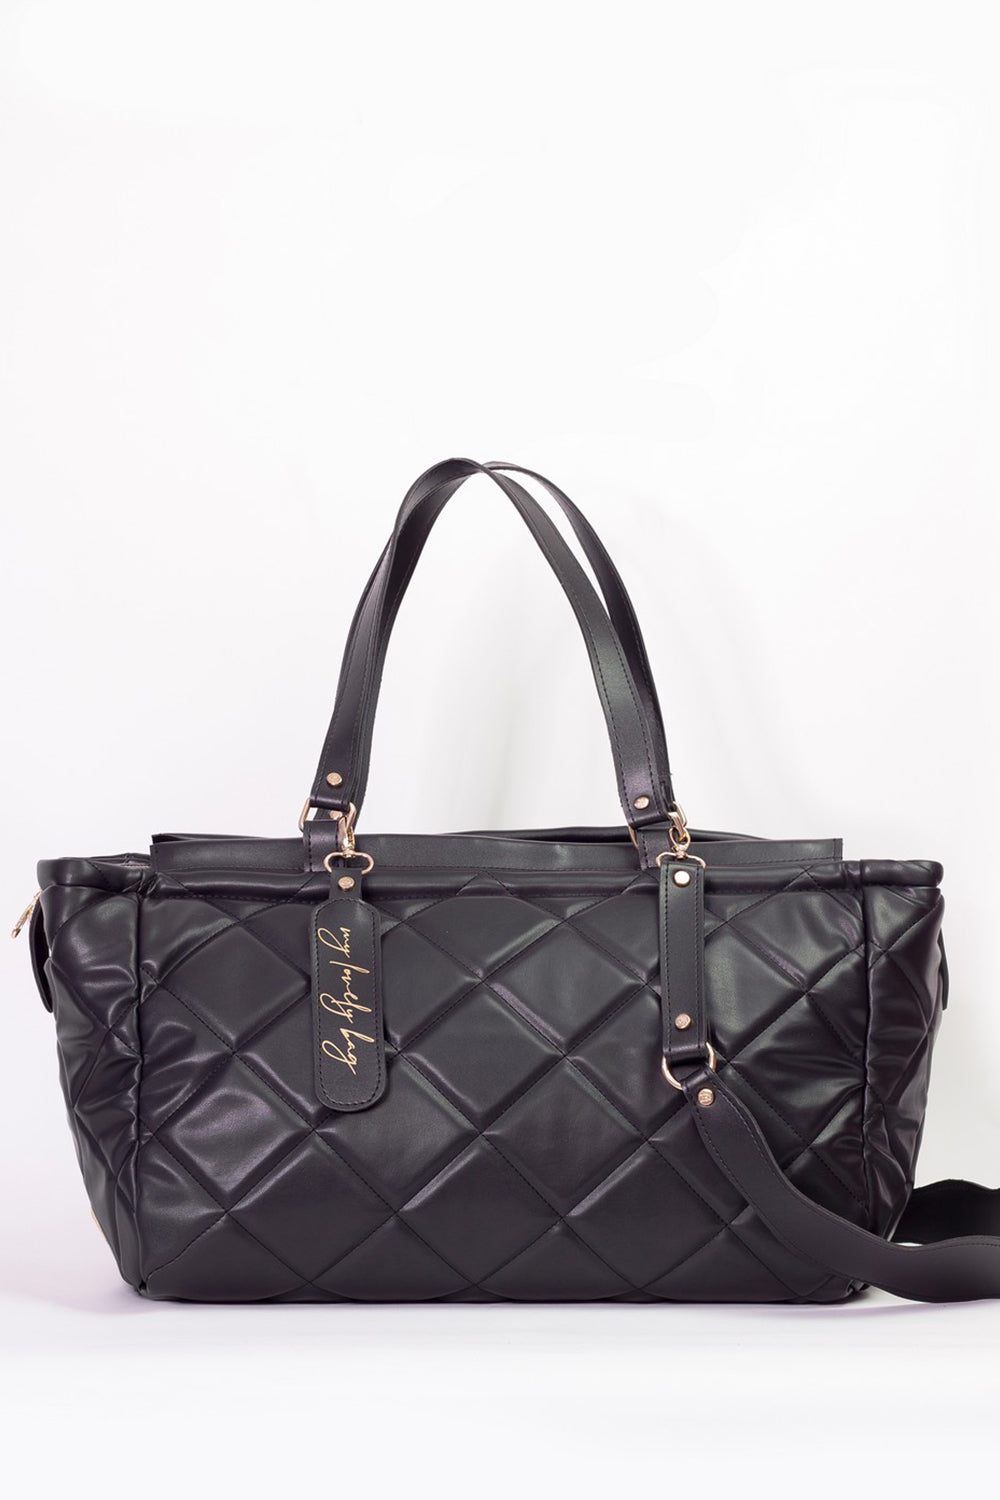 Luxury large handbag for weekend and trip - BAG - LOLA - BLACK GOLD